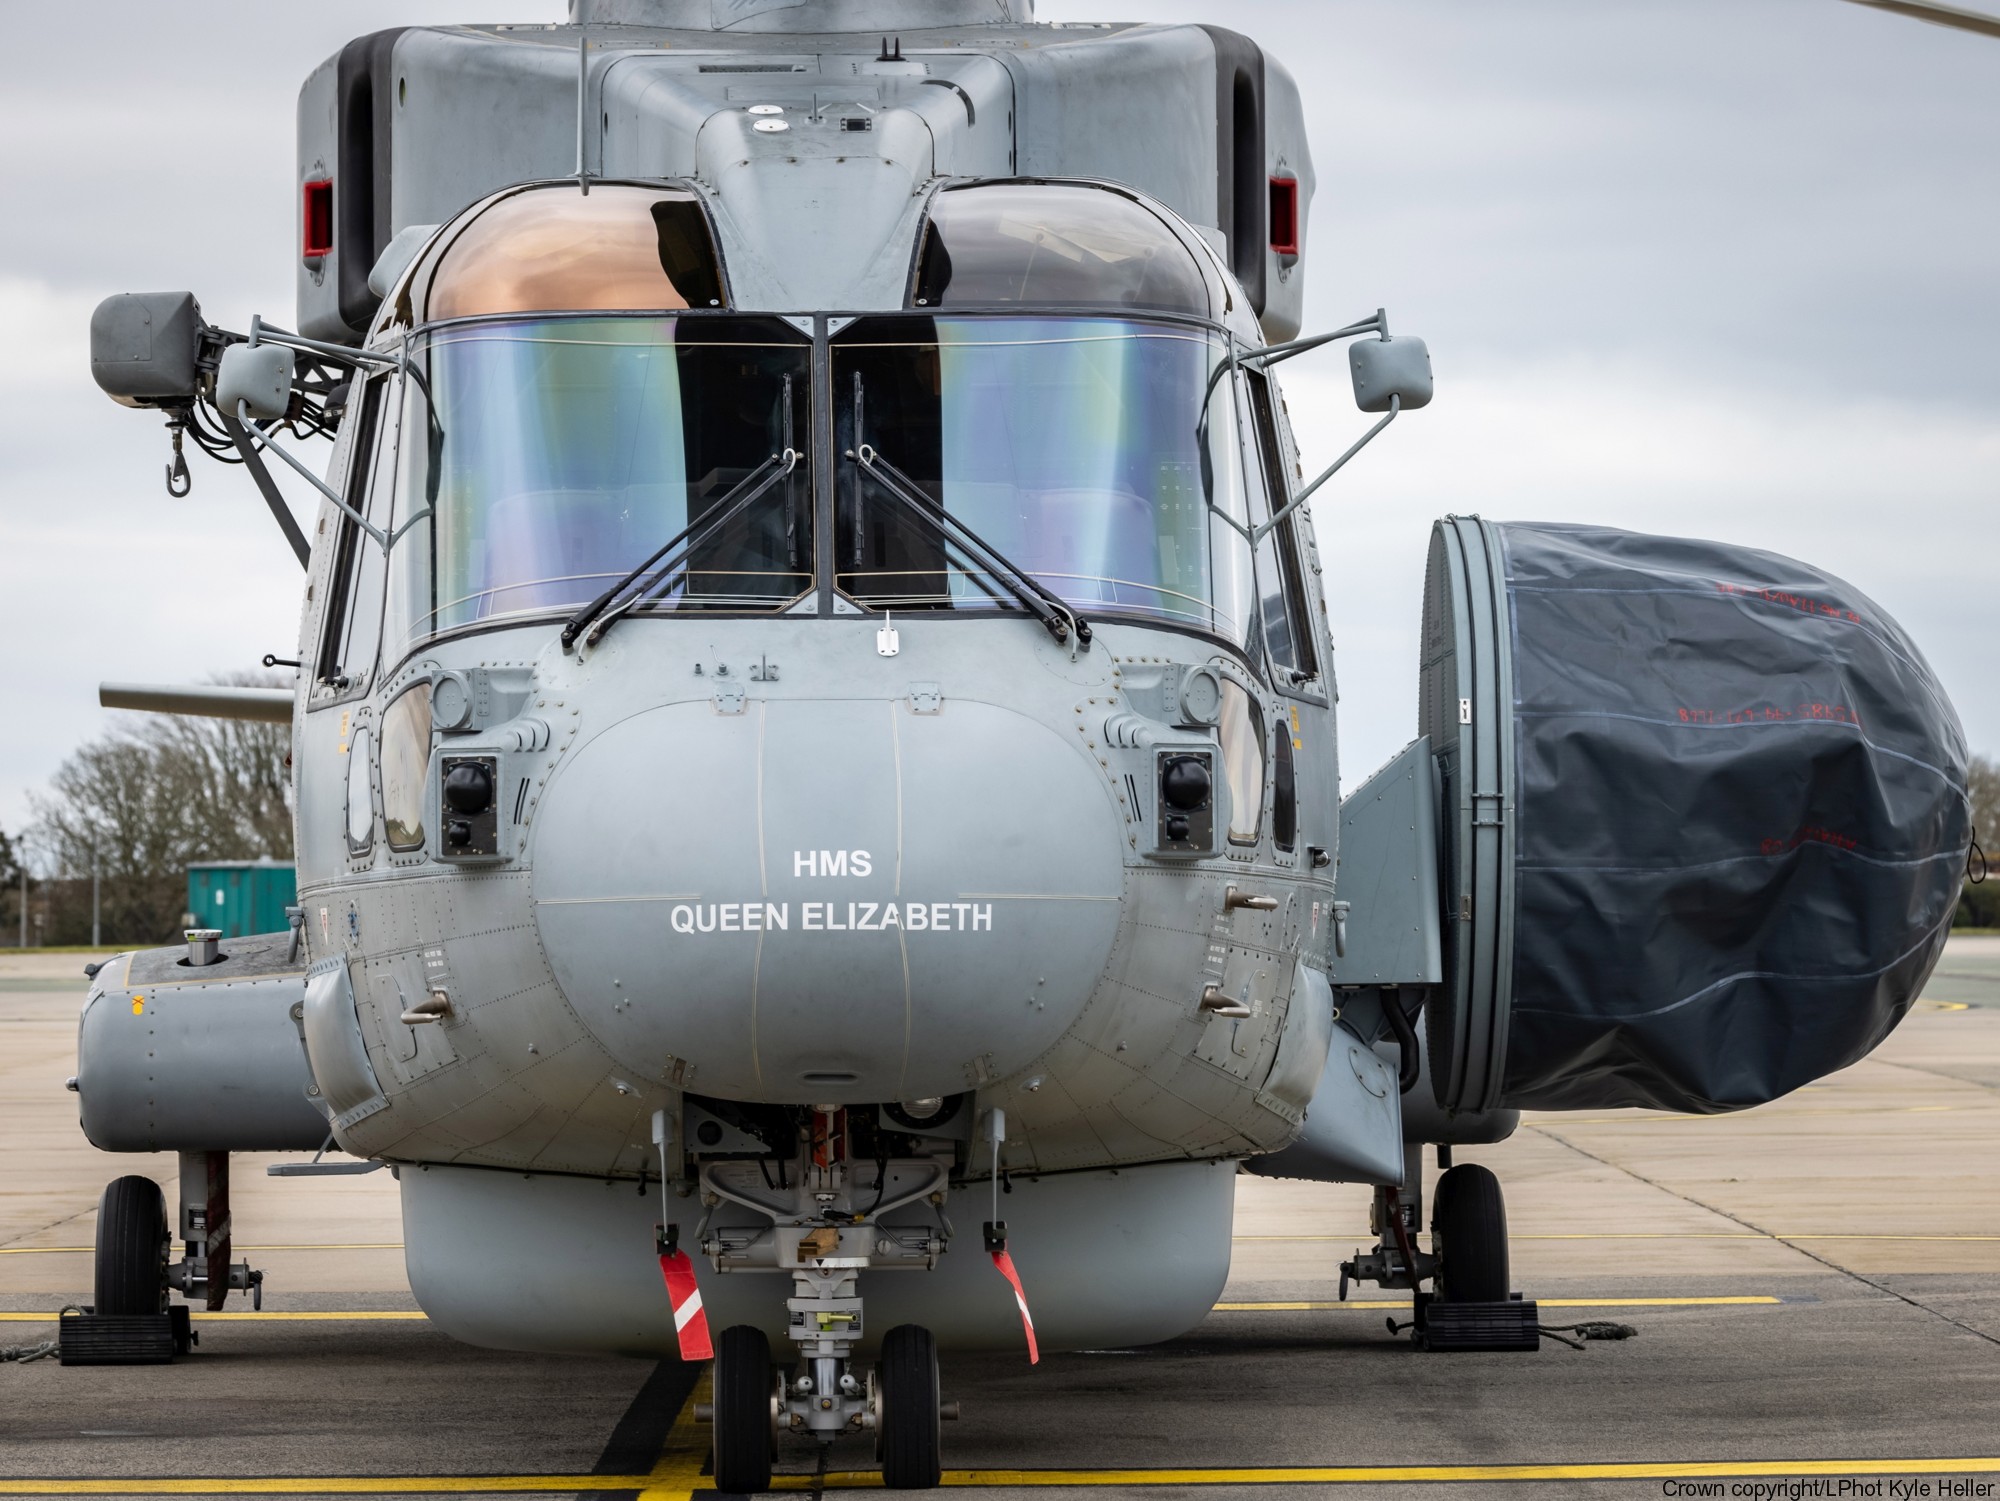 merlin hm mark 2 asac aew crowsnest airborne surveillance control helicopter royal navy fleet air arm agusta westland leonardo 820 nas 08